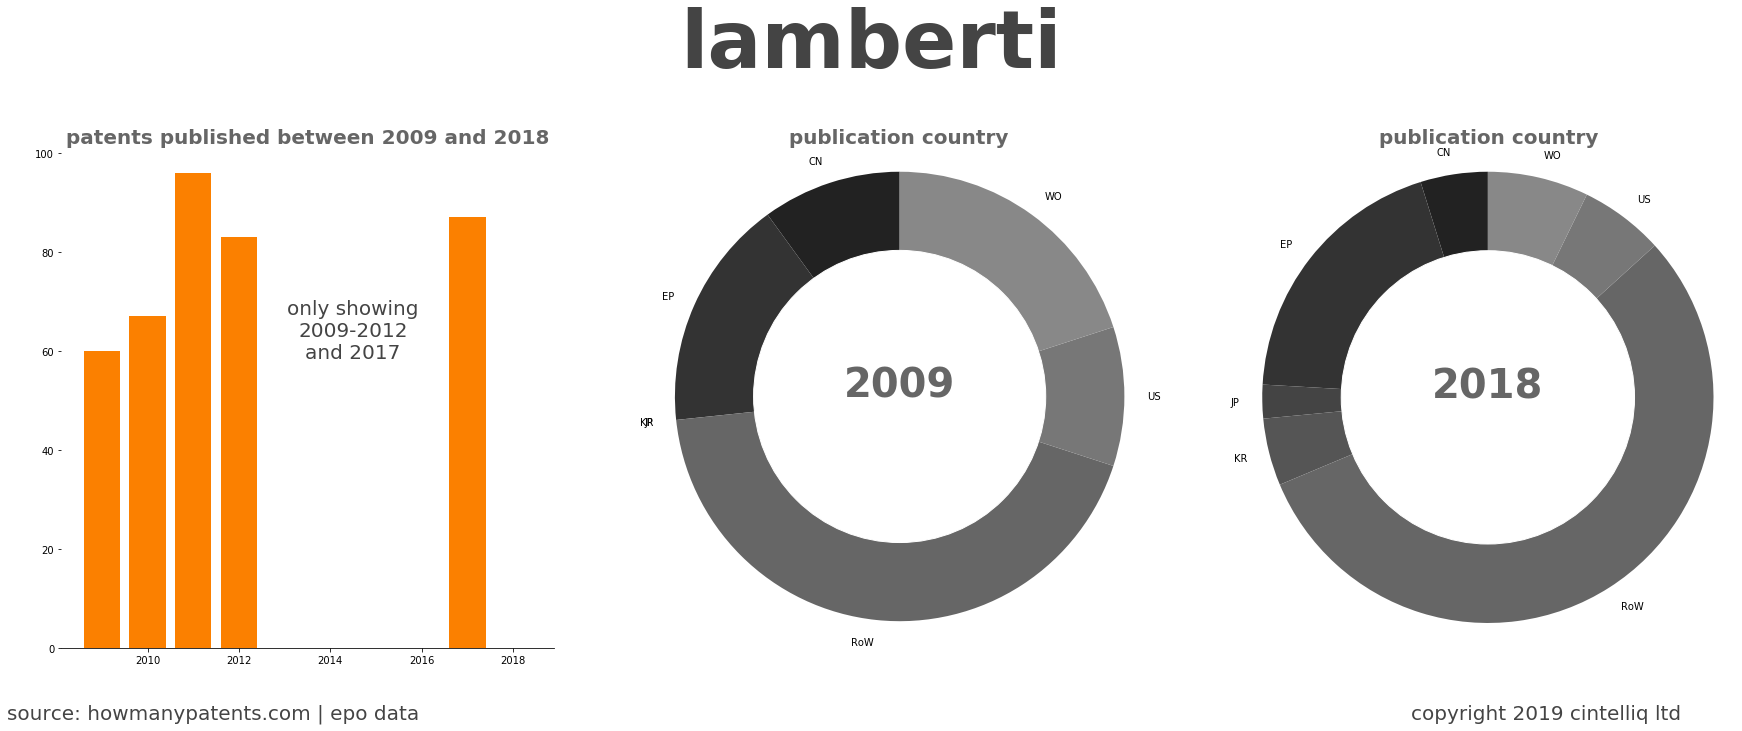 summary of patents for Lamberti